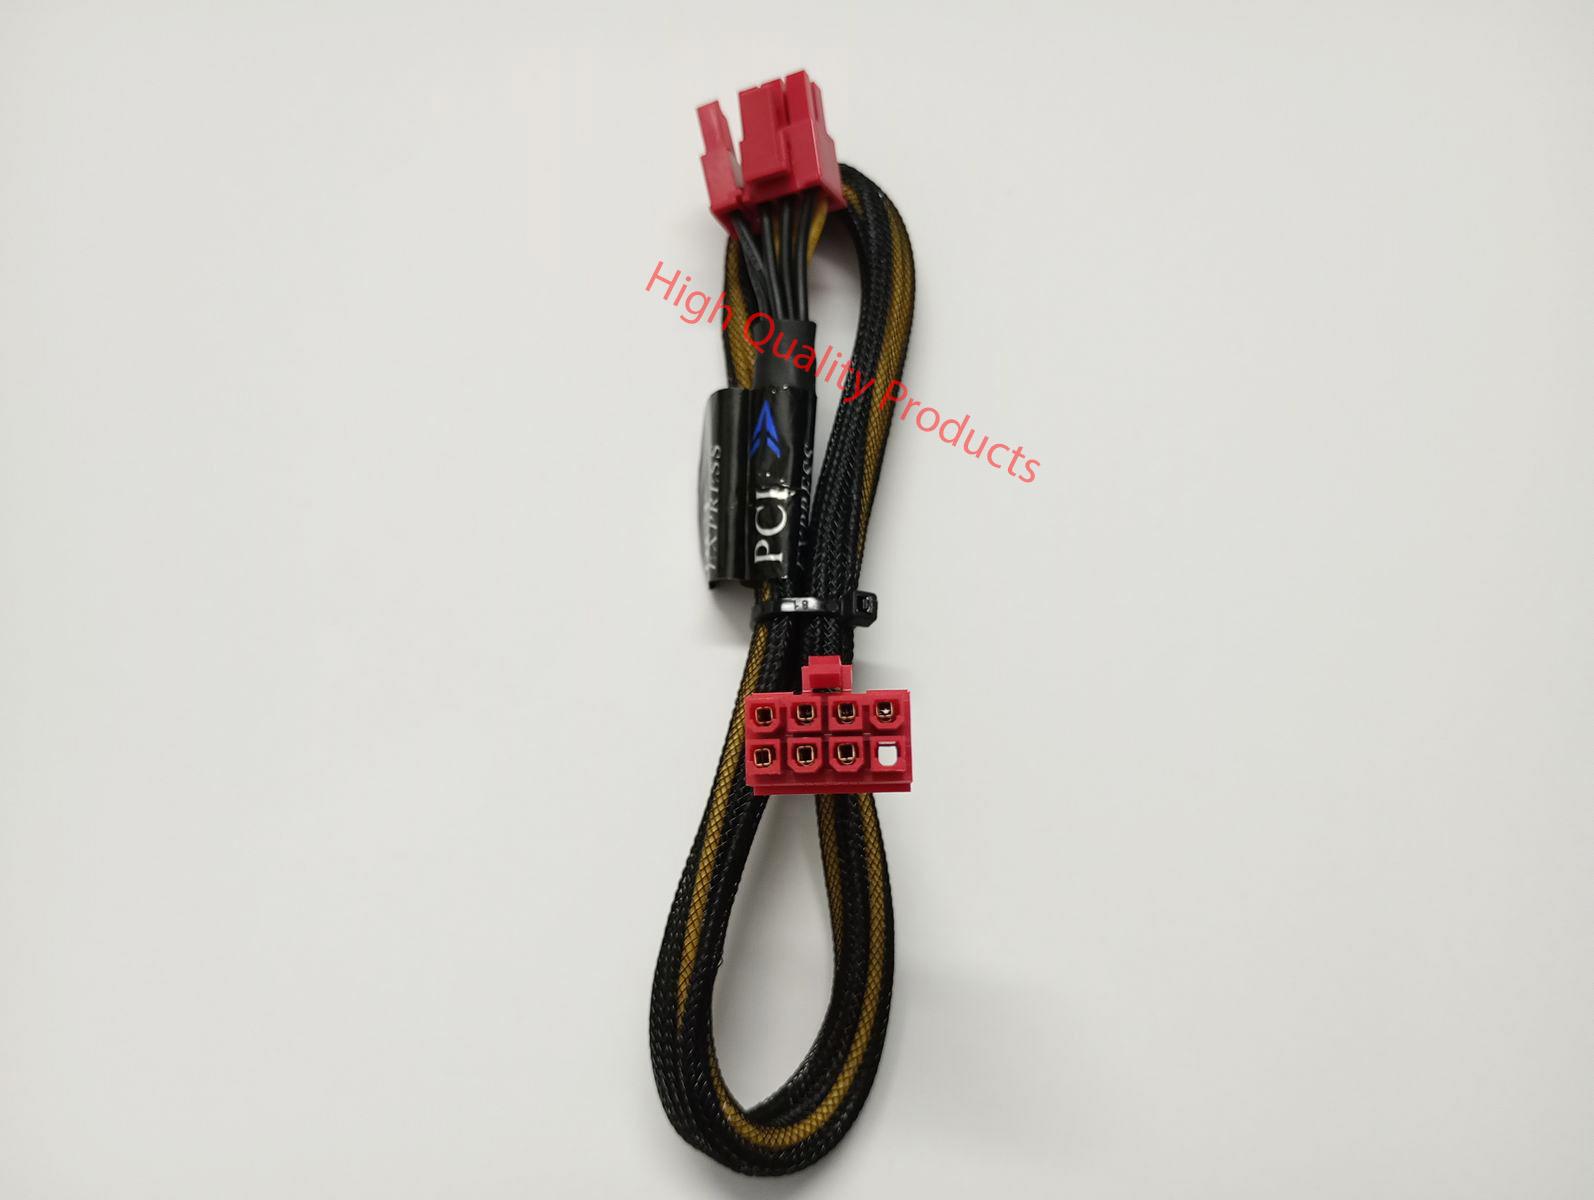 -----Cable Modular for Power Supply OCZ MODXSTREAM-PRO Serie Foto 7201167-F1.jpg